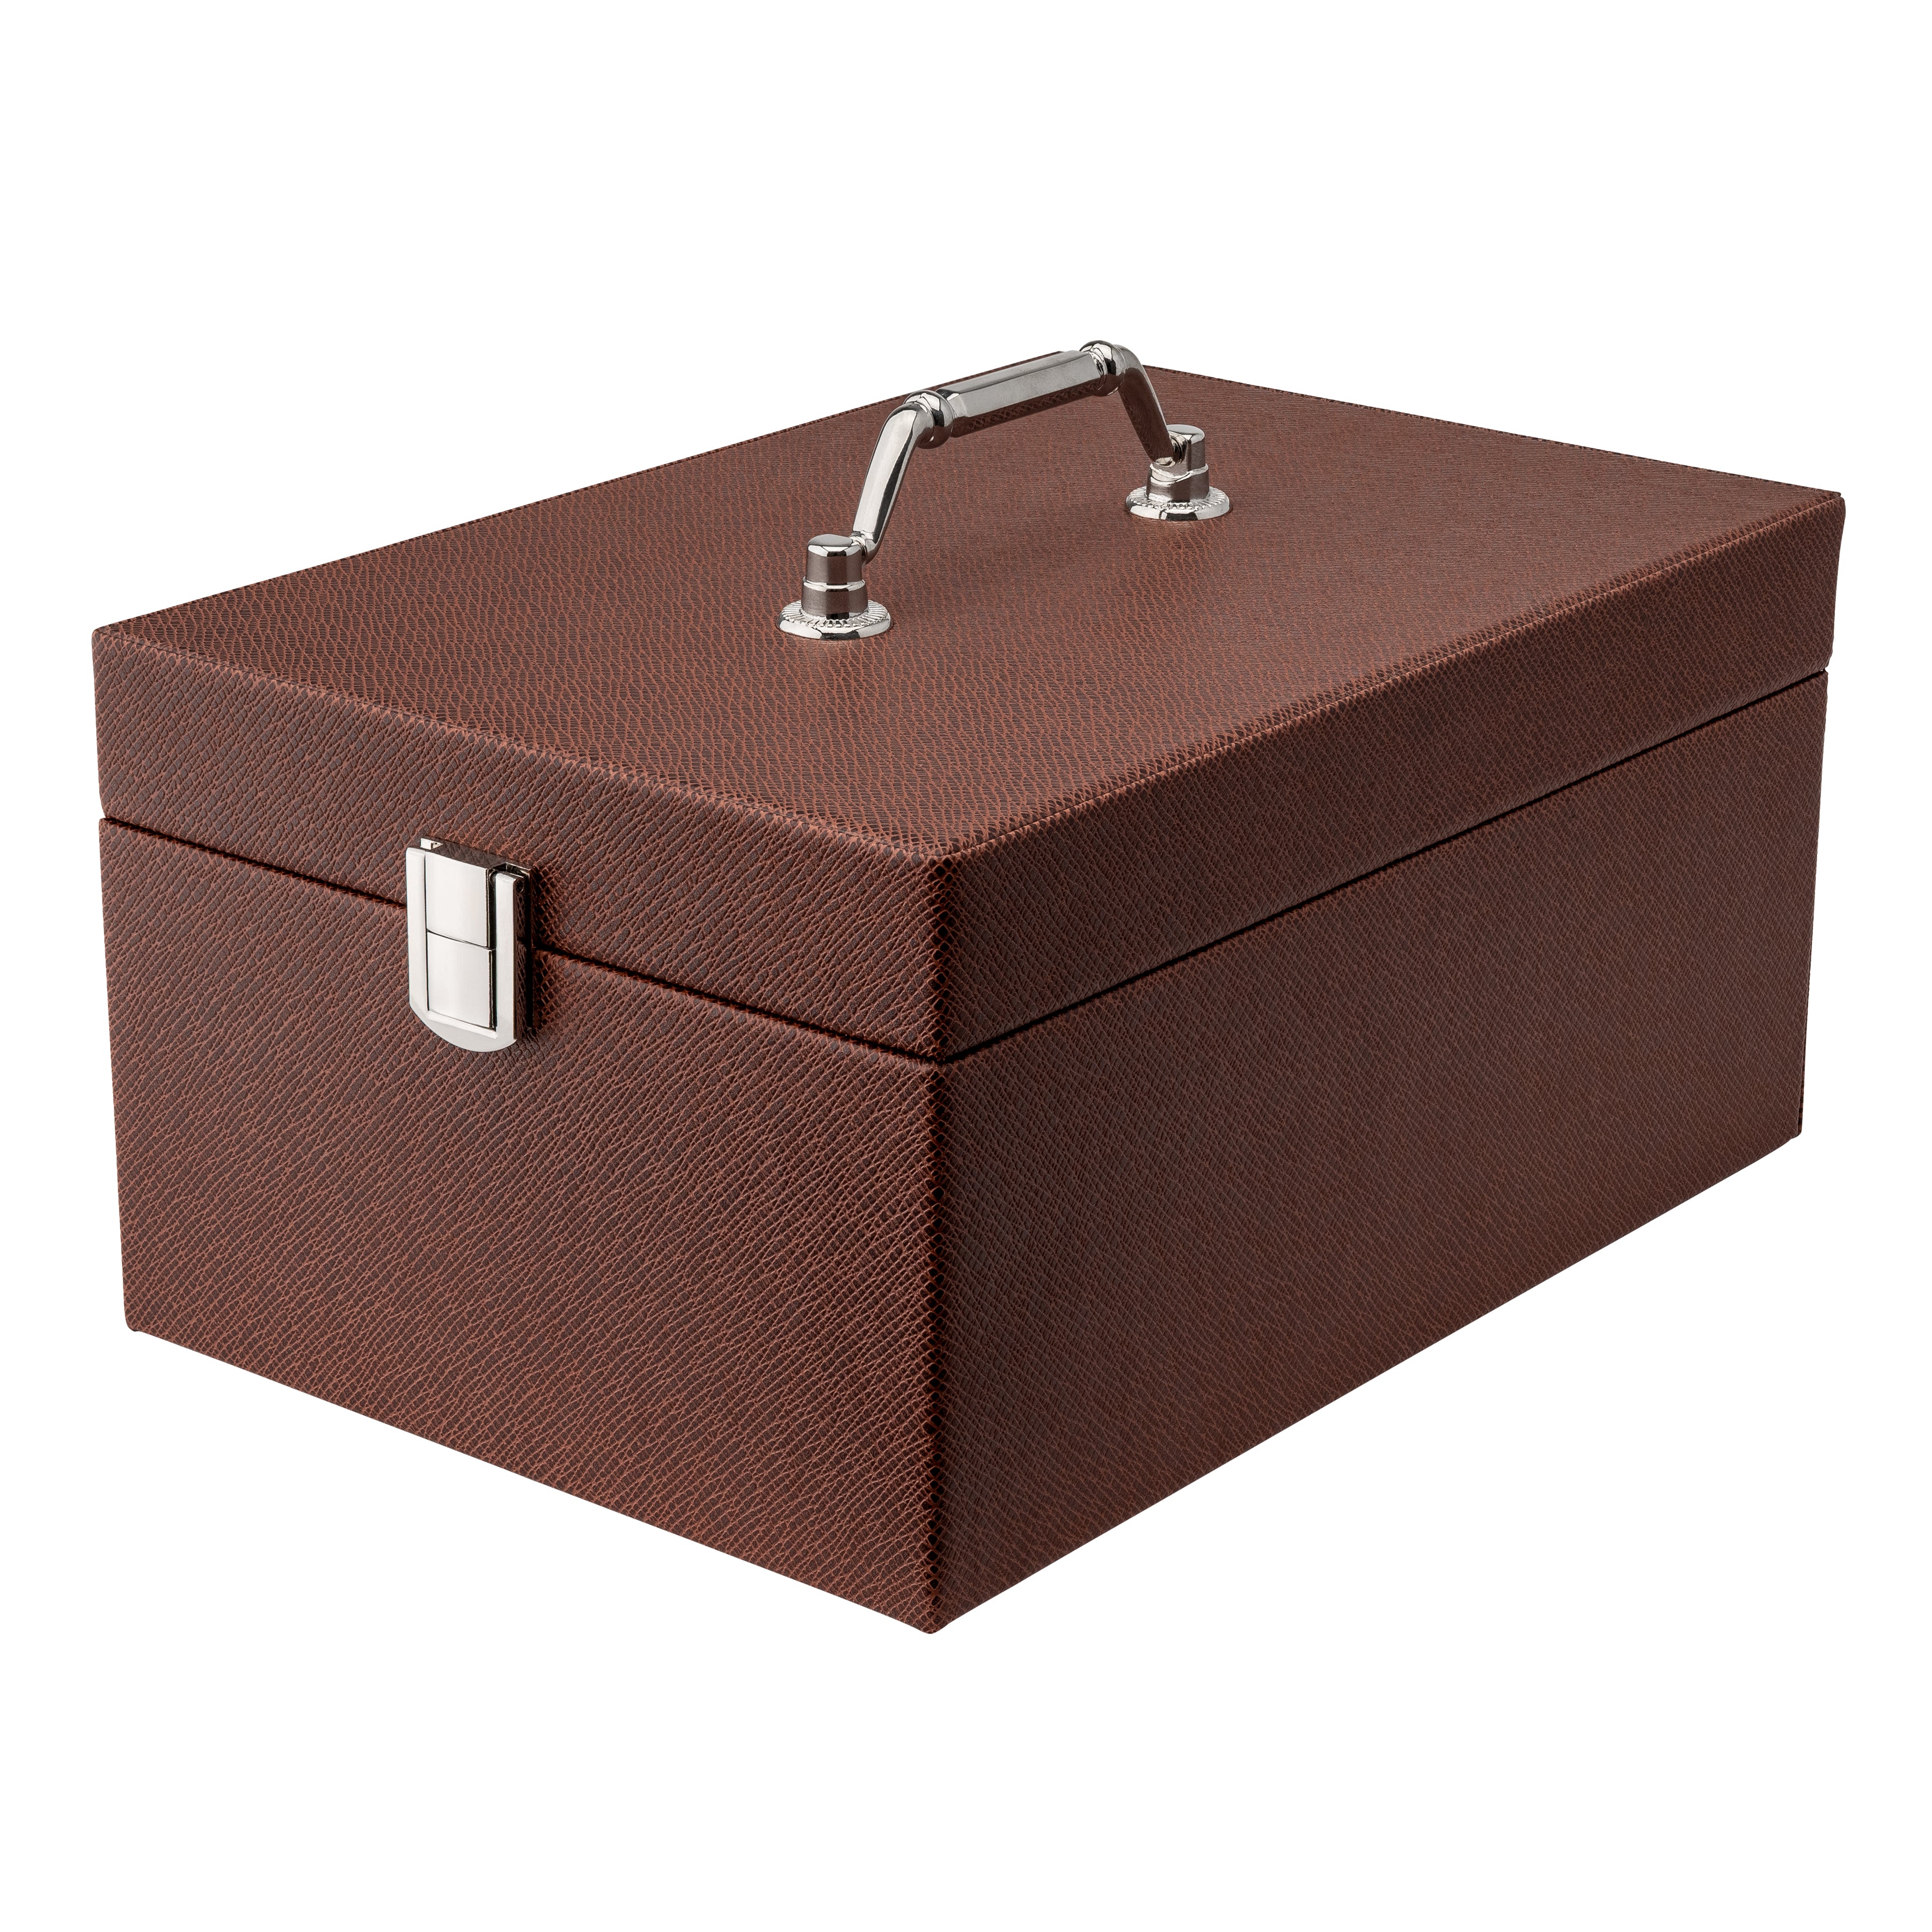 Tarrago Shoe Care Luxury Kit Wooden Brown case